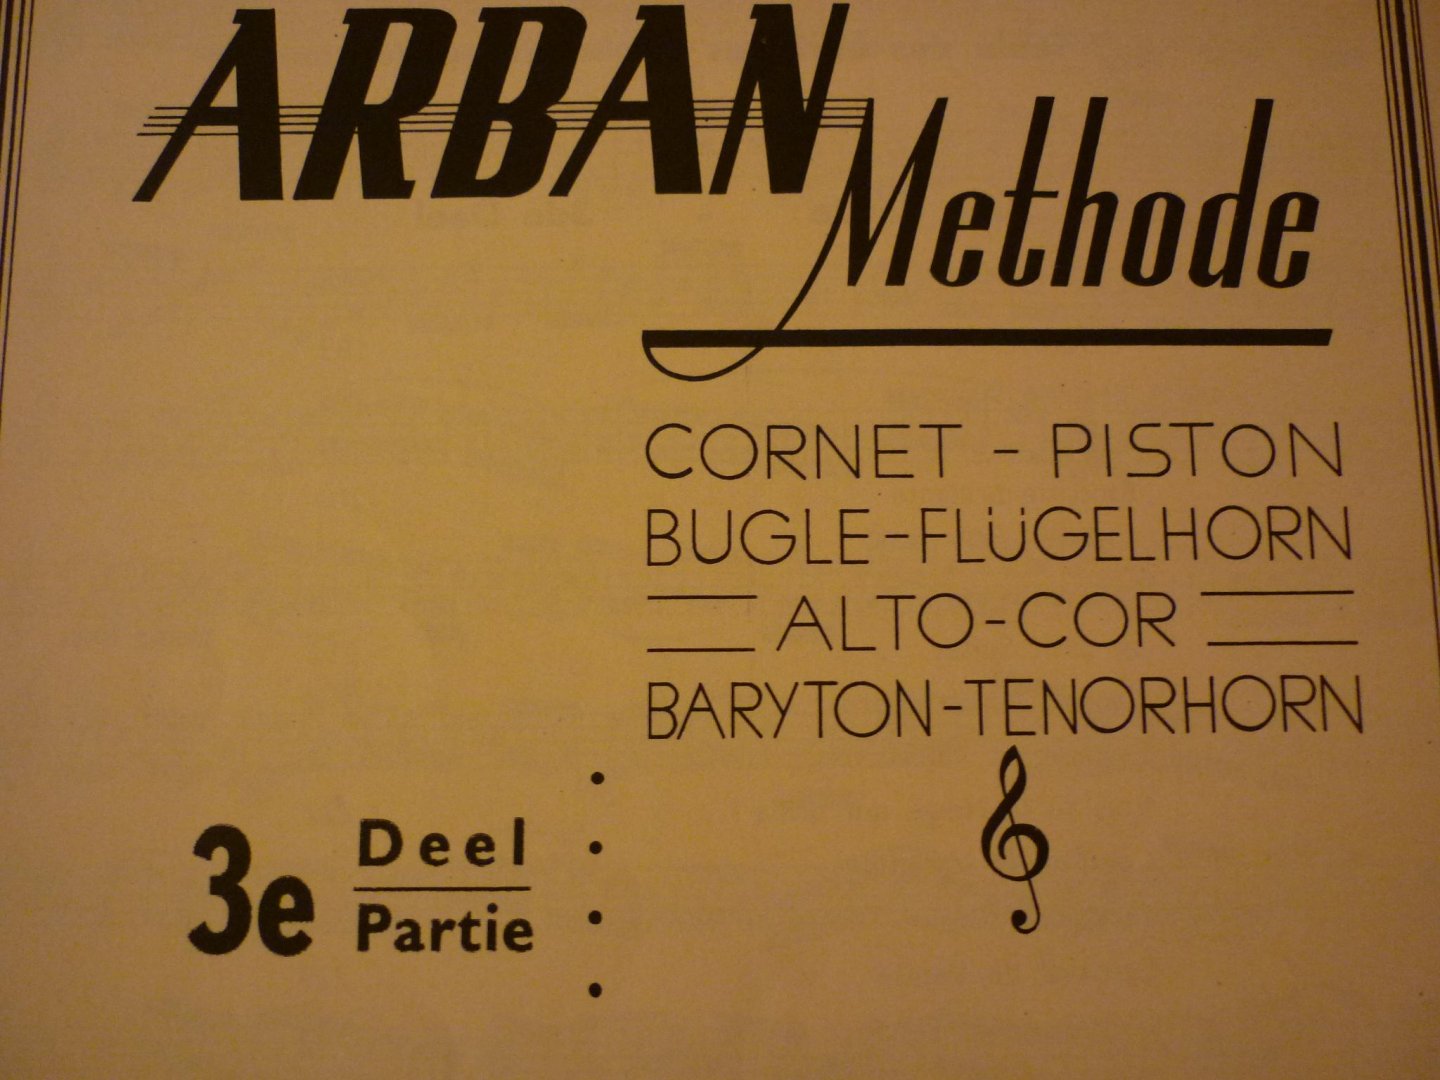 Div. Componisten - Arban methode; Cornet-Piston Bugle-Flugelhorn Alto-Cor Baryton-Tenorhorn  - Deel 3